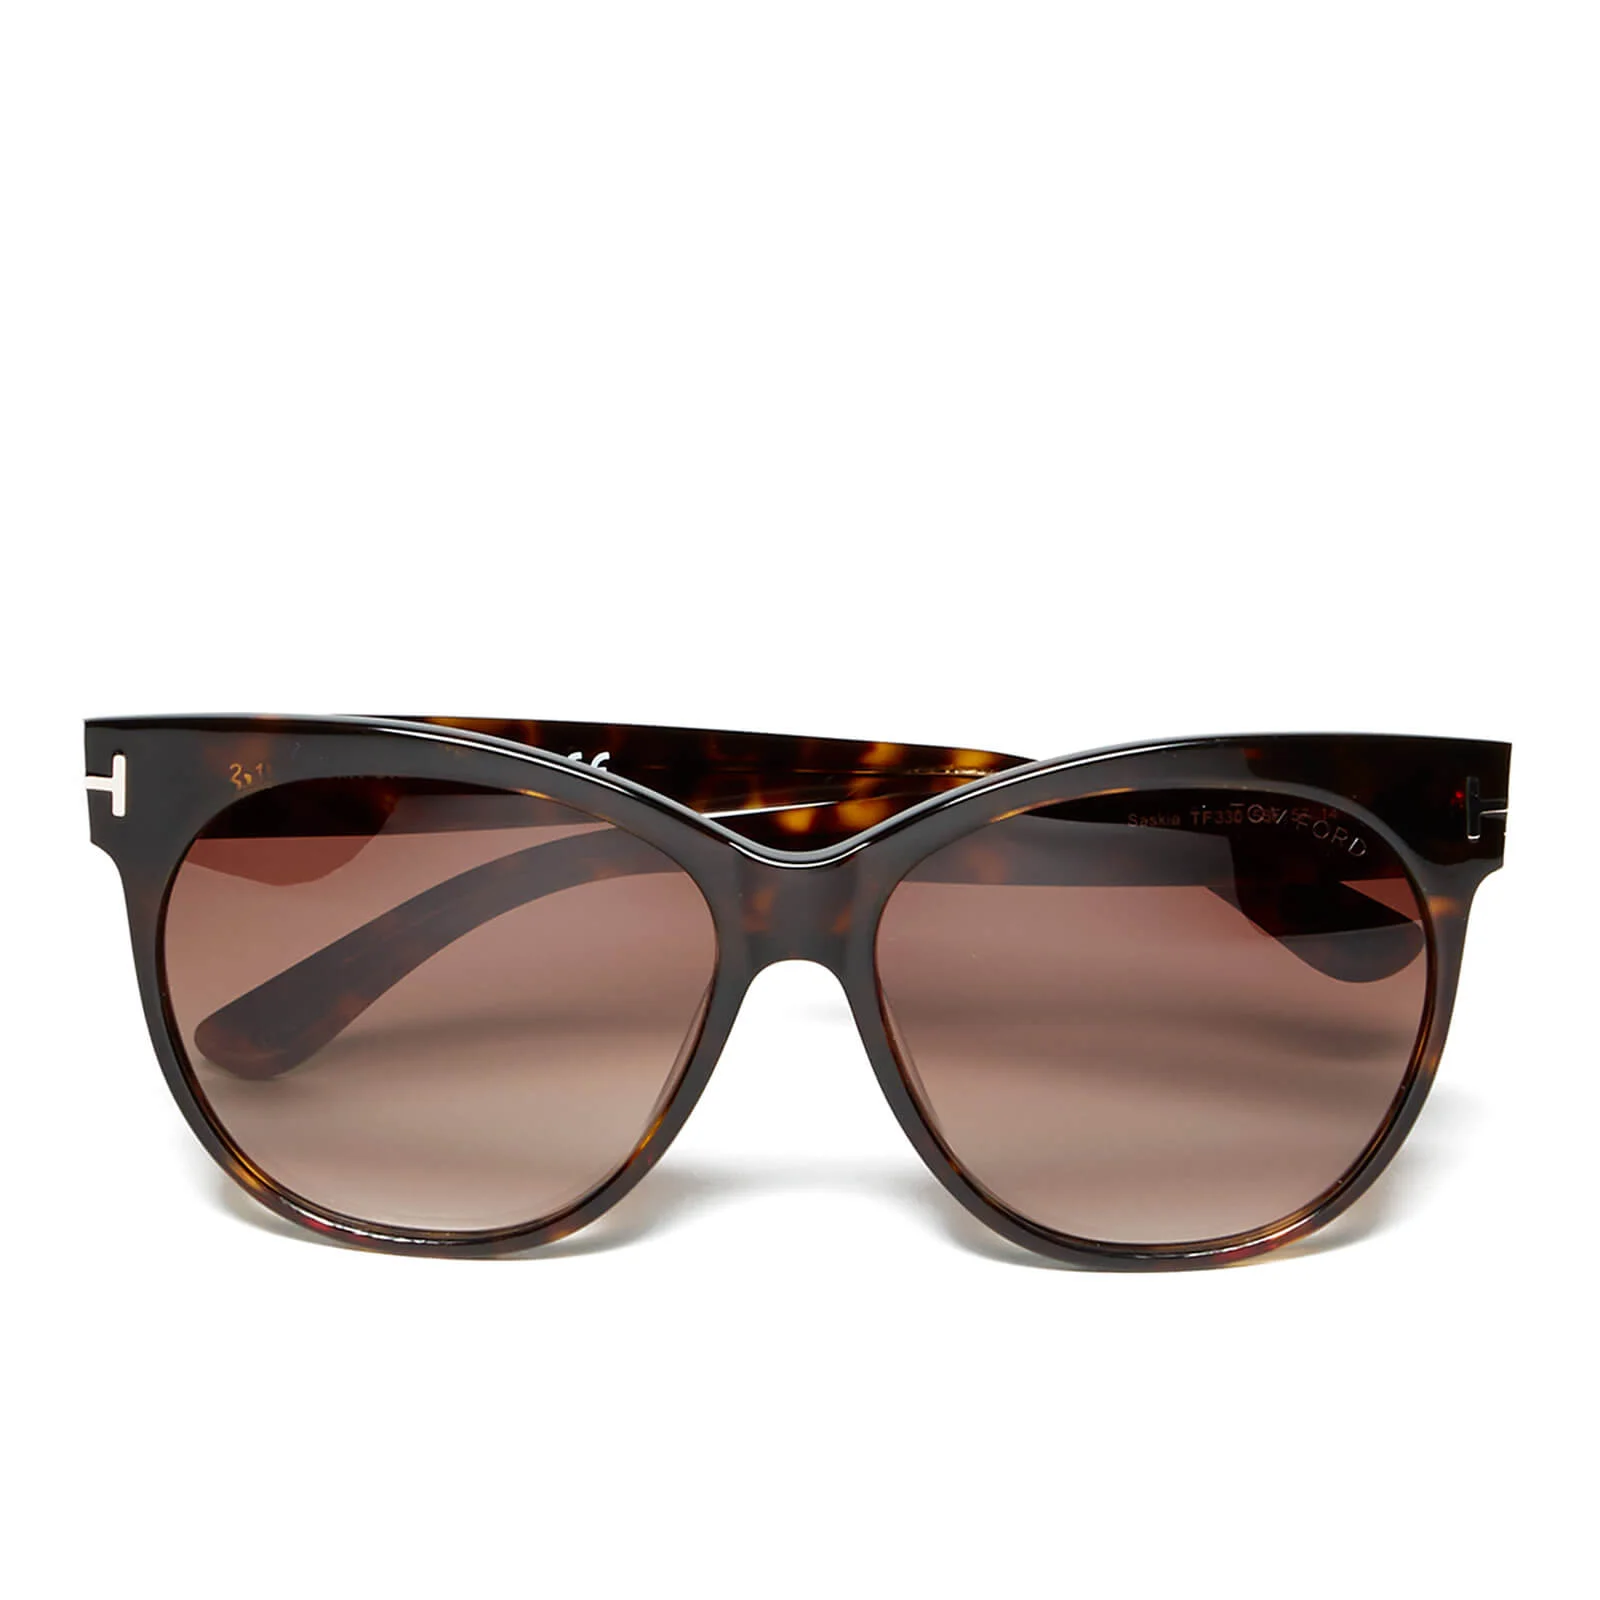 Tom Ford Women's Saskia Sunglasses - Brown Image 1